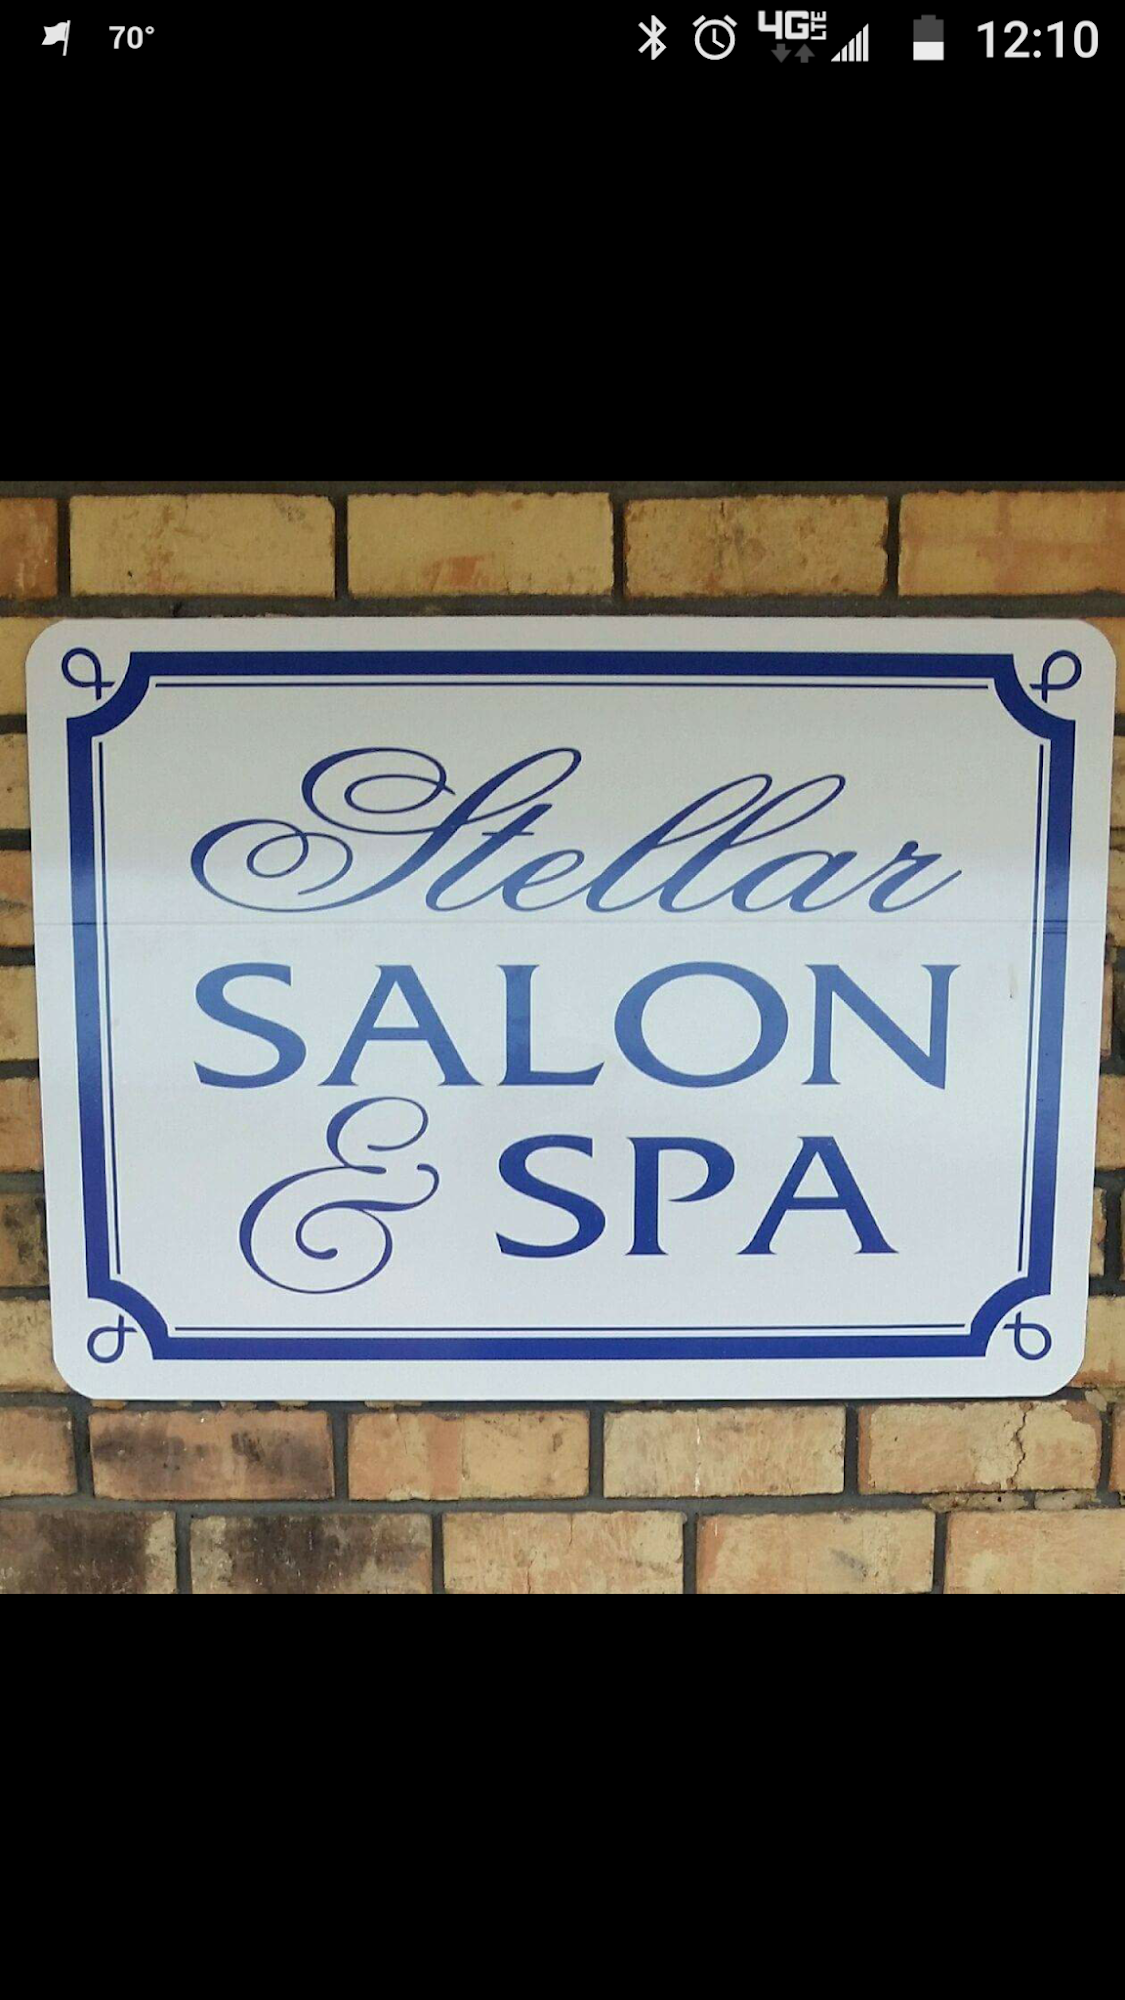 Stellar Salon & Spa